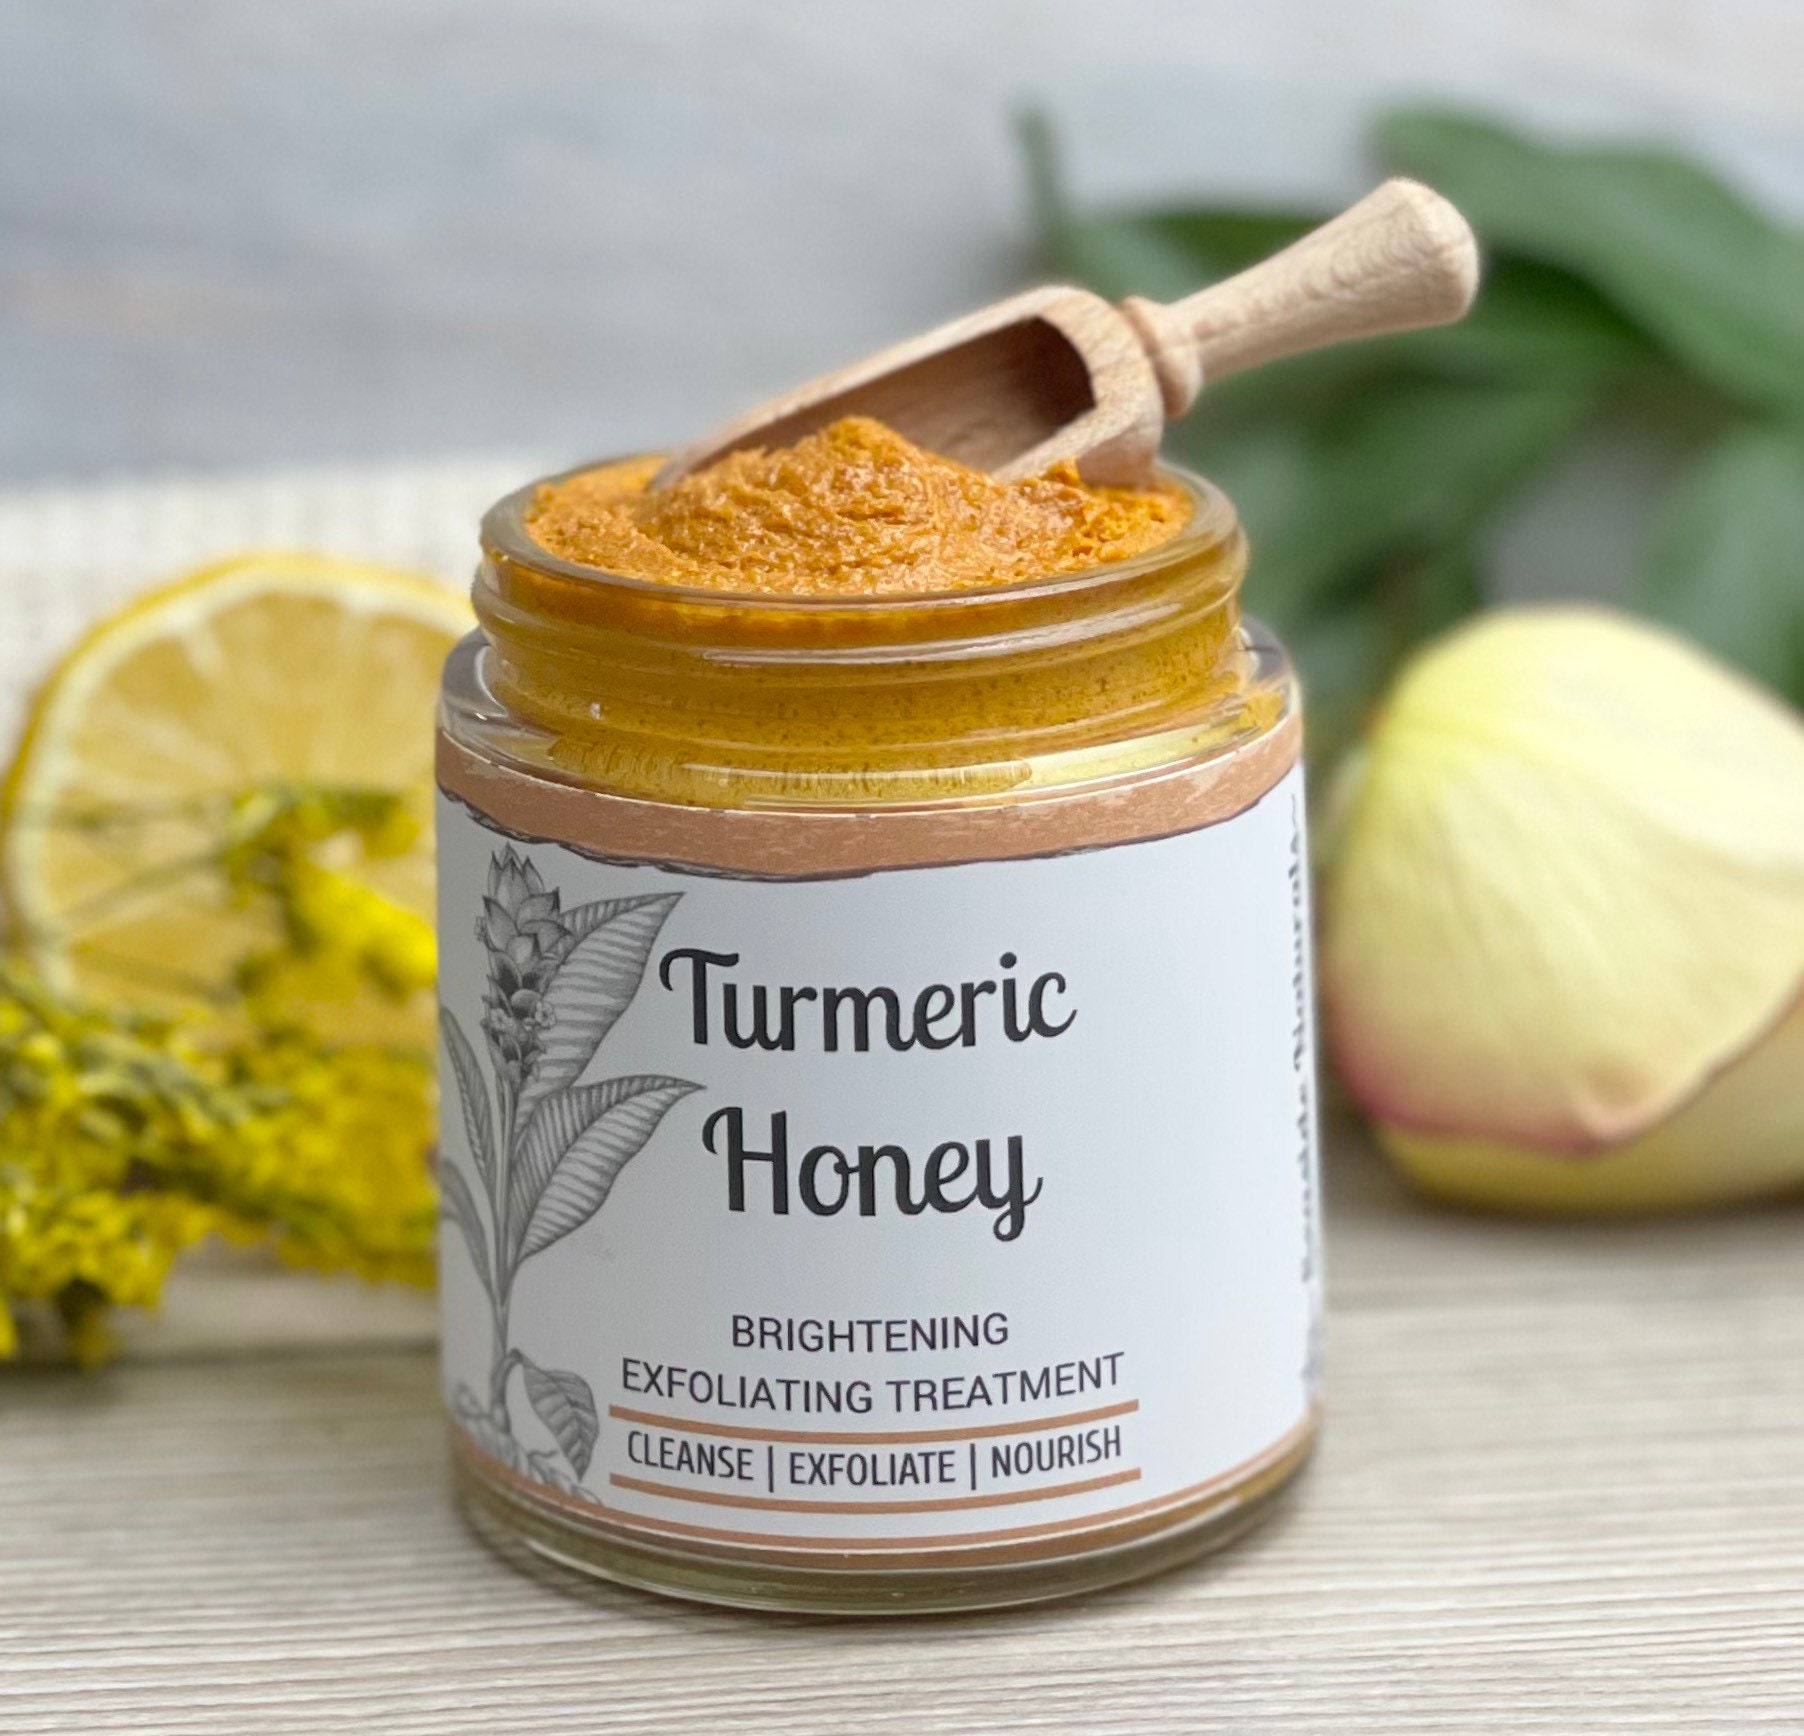 Turmeric Honey Face Polishing Mask With Sea Buckthorn for a